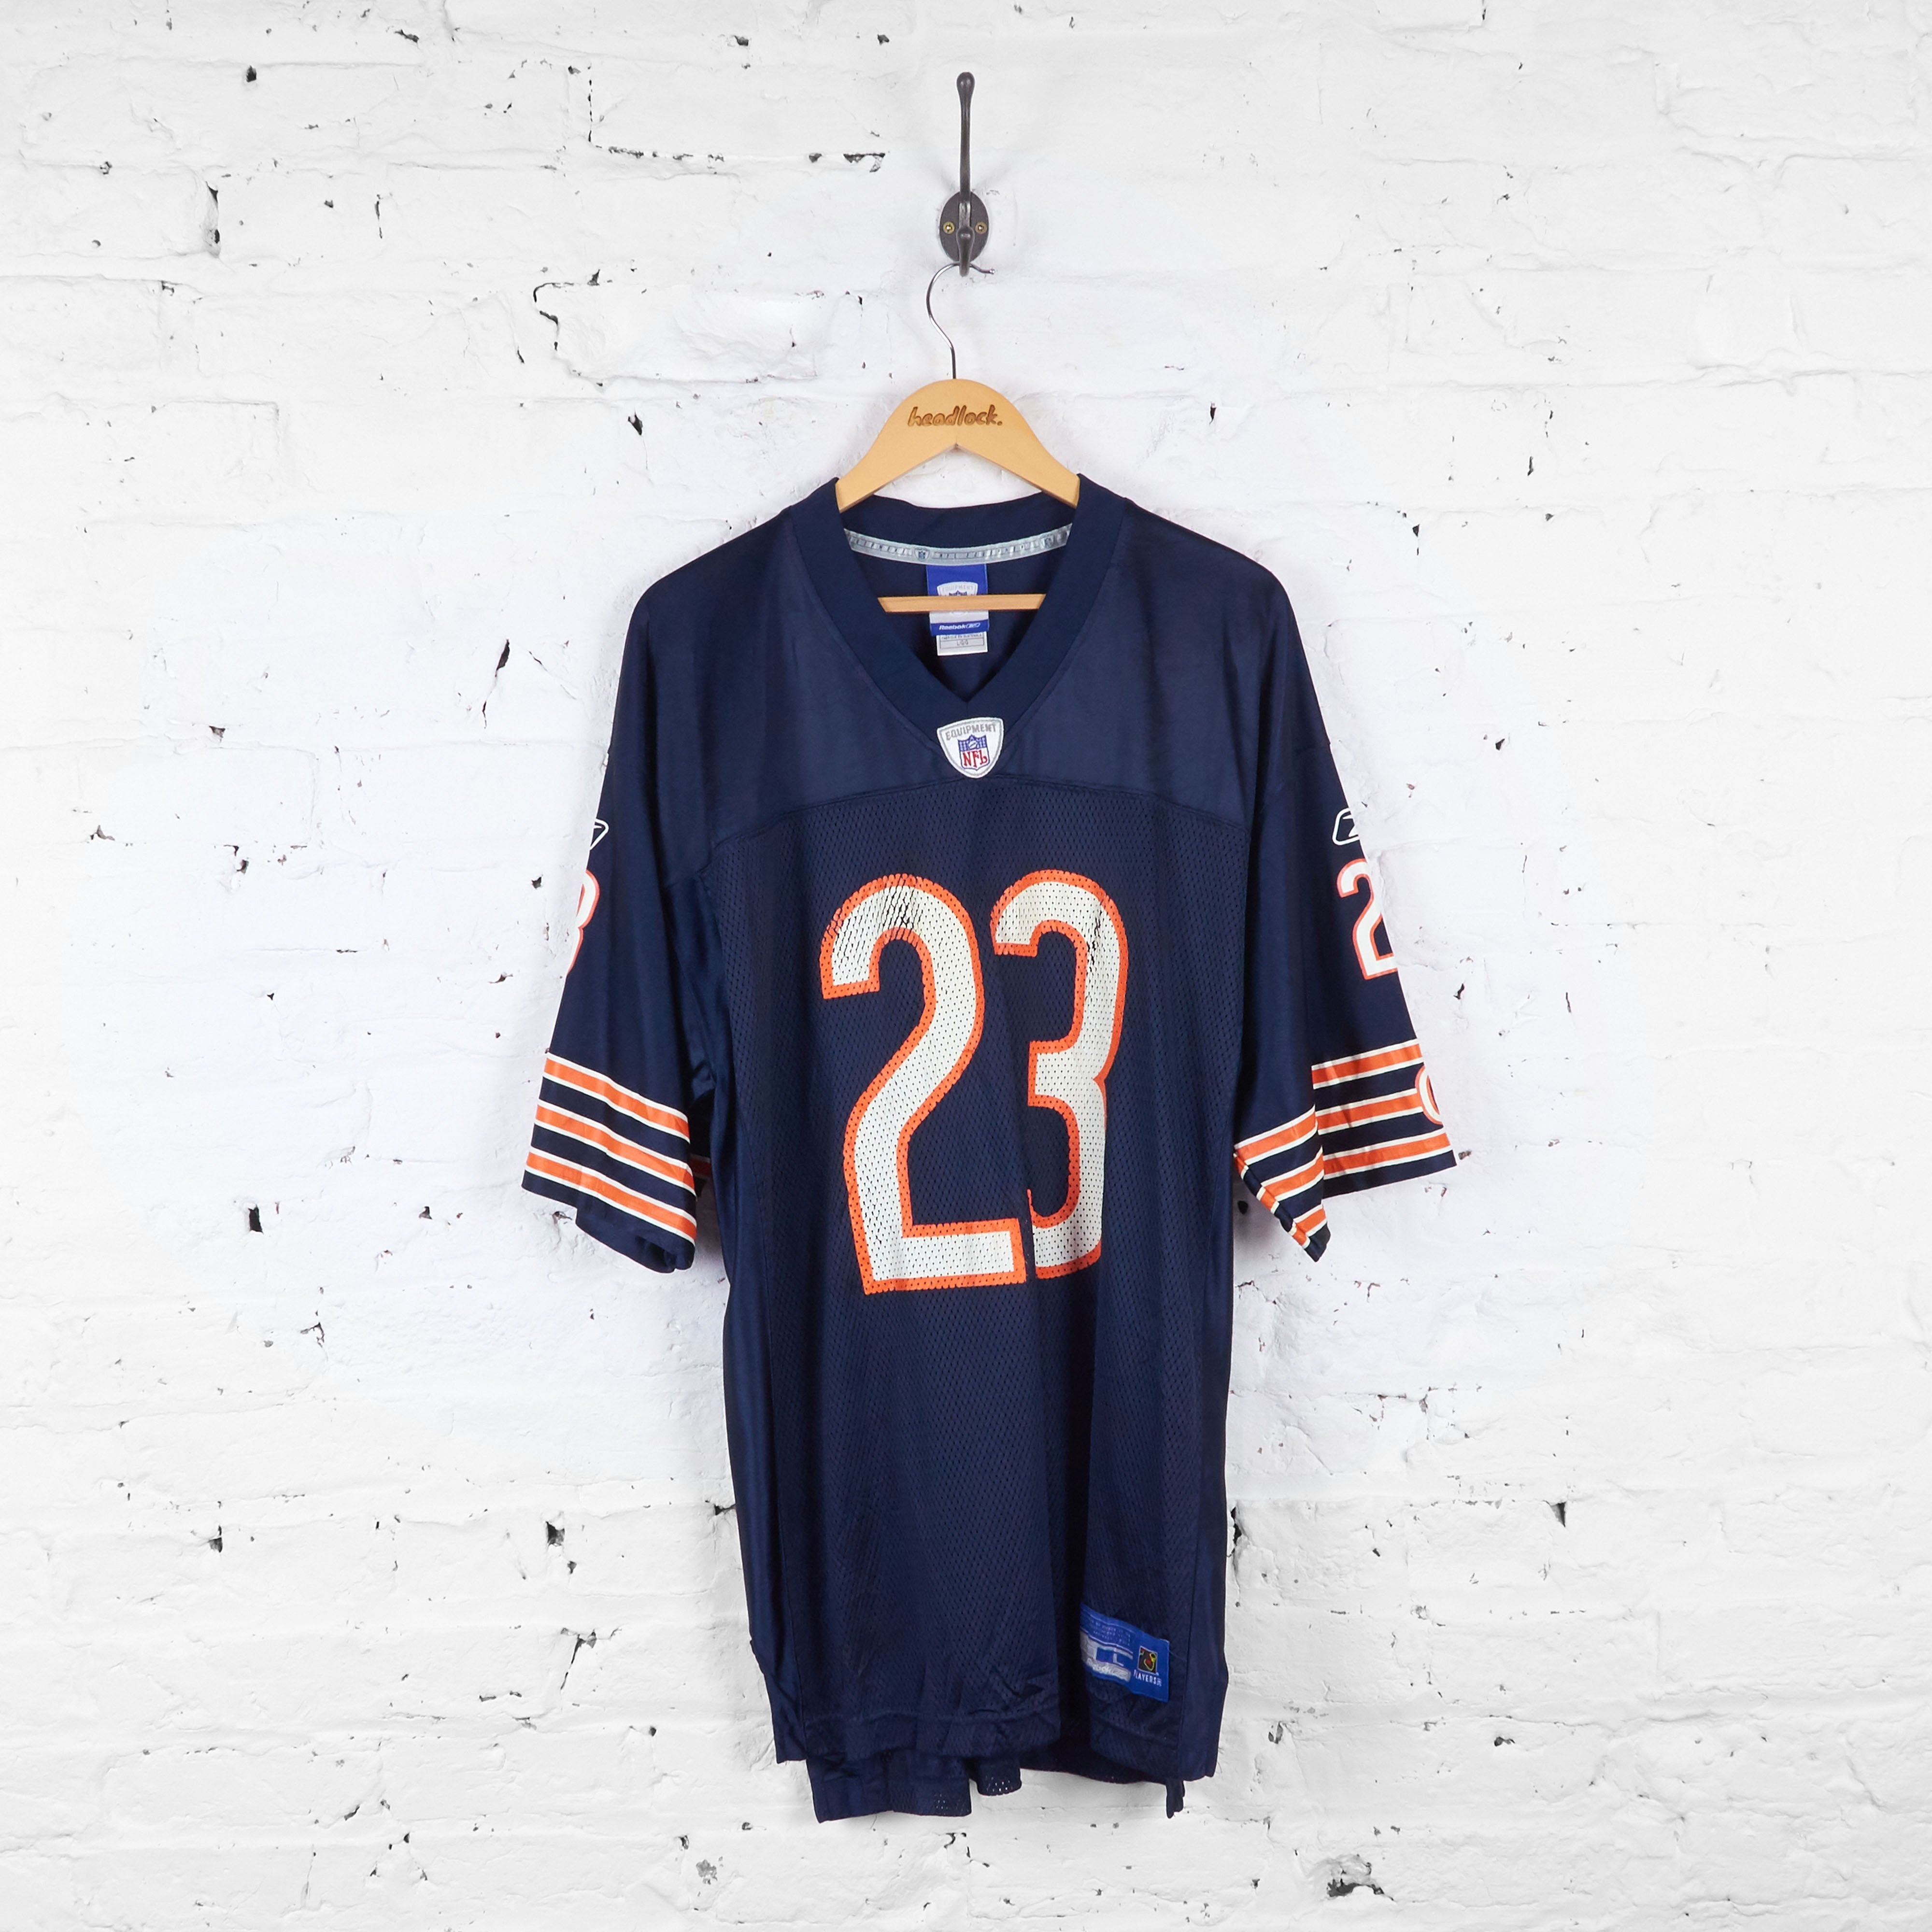 bears jersey 23